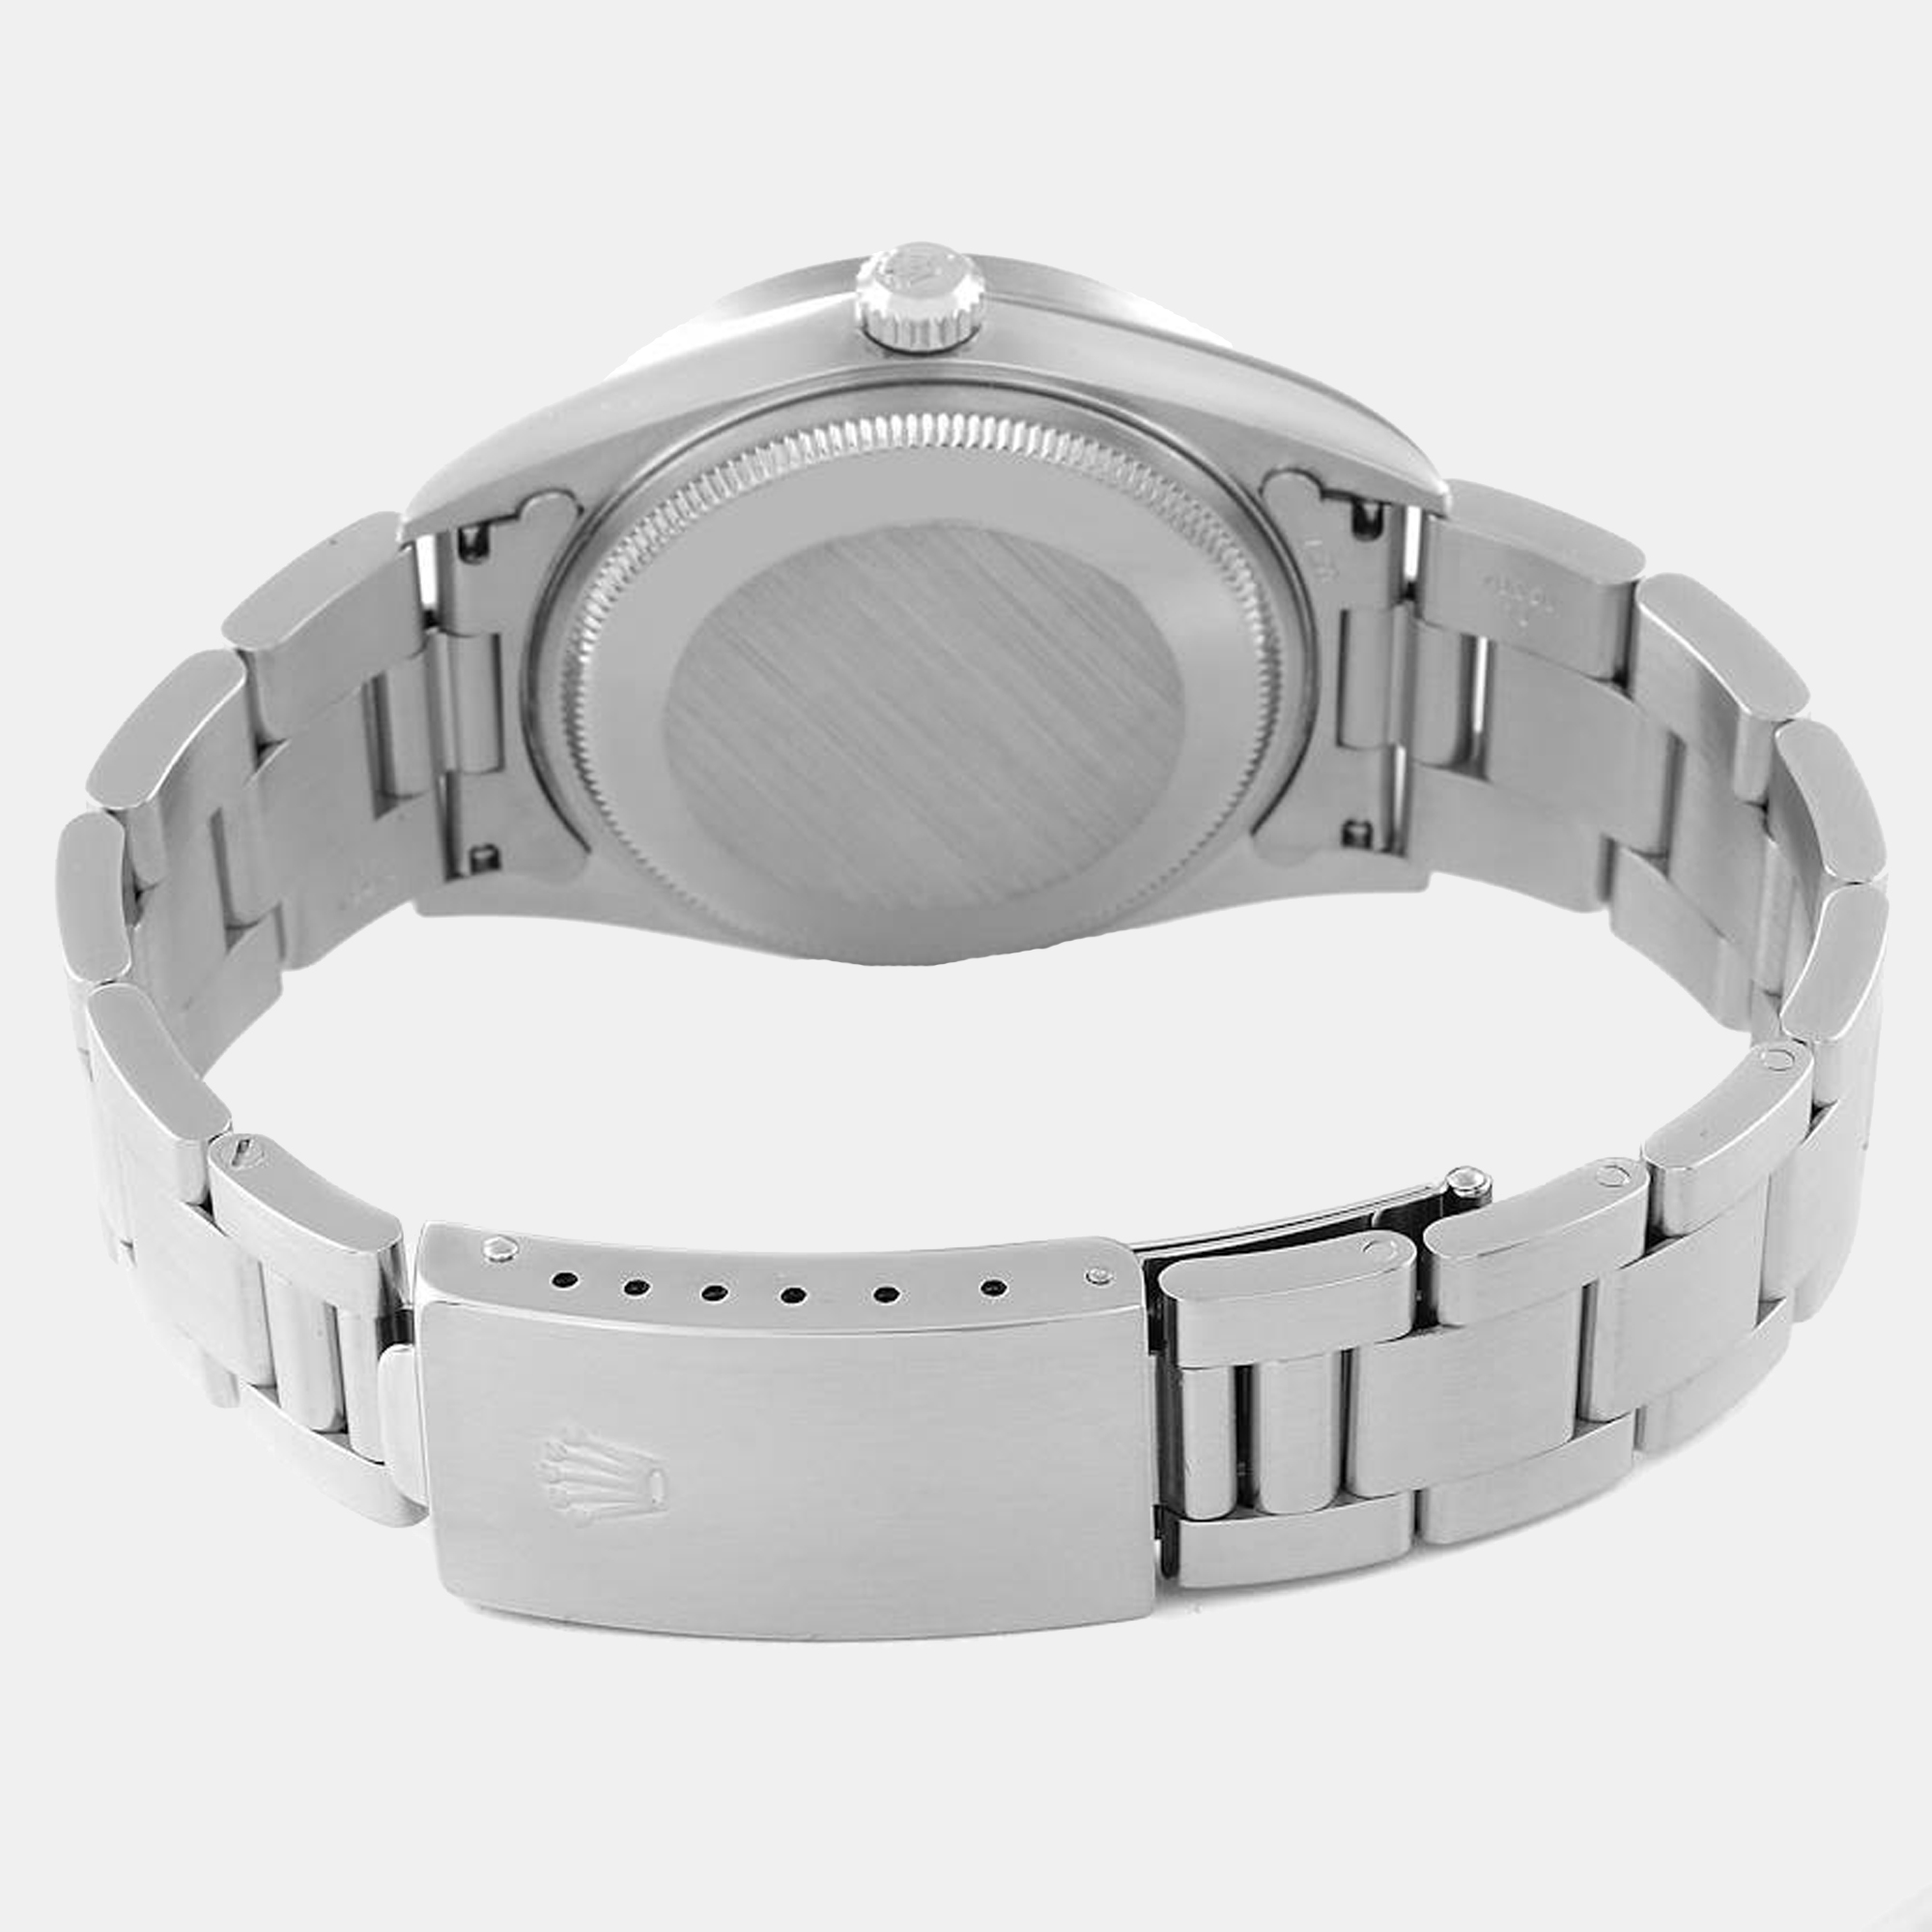 Rolex Blue Stainless Steel Air-King 14010 Men's Wristwatch 34 Mm